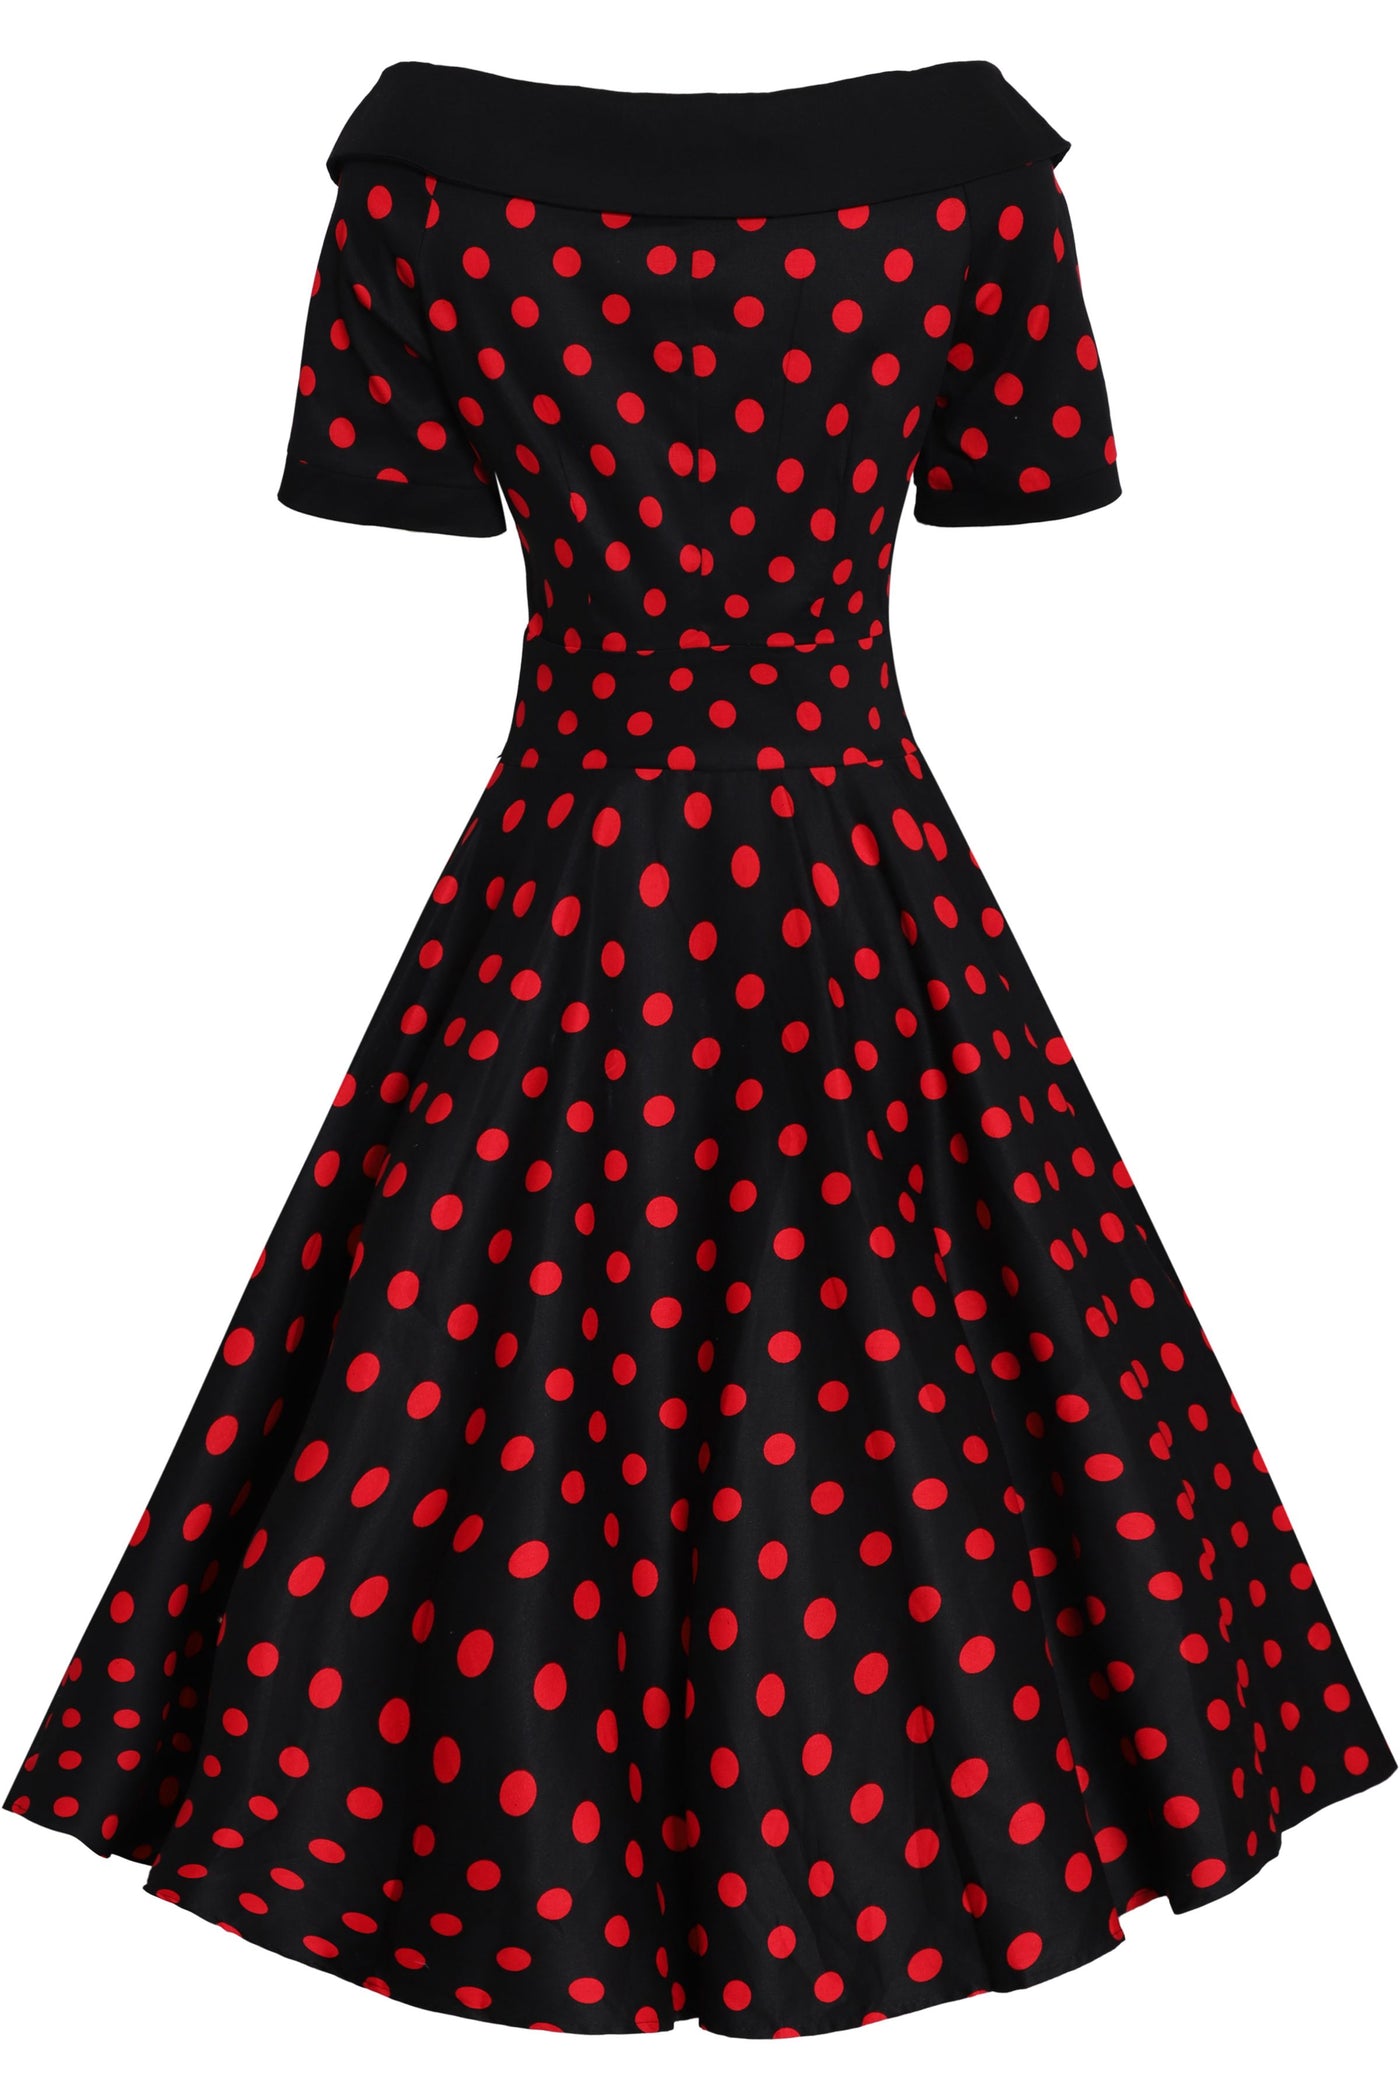 Back View of Black/Red Polka Dot 1950's Dress